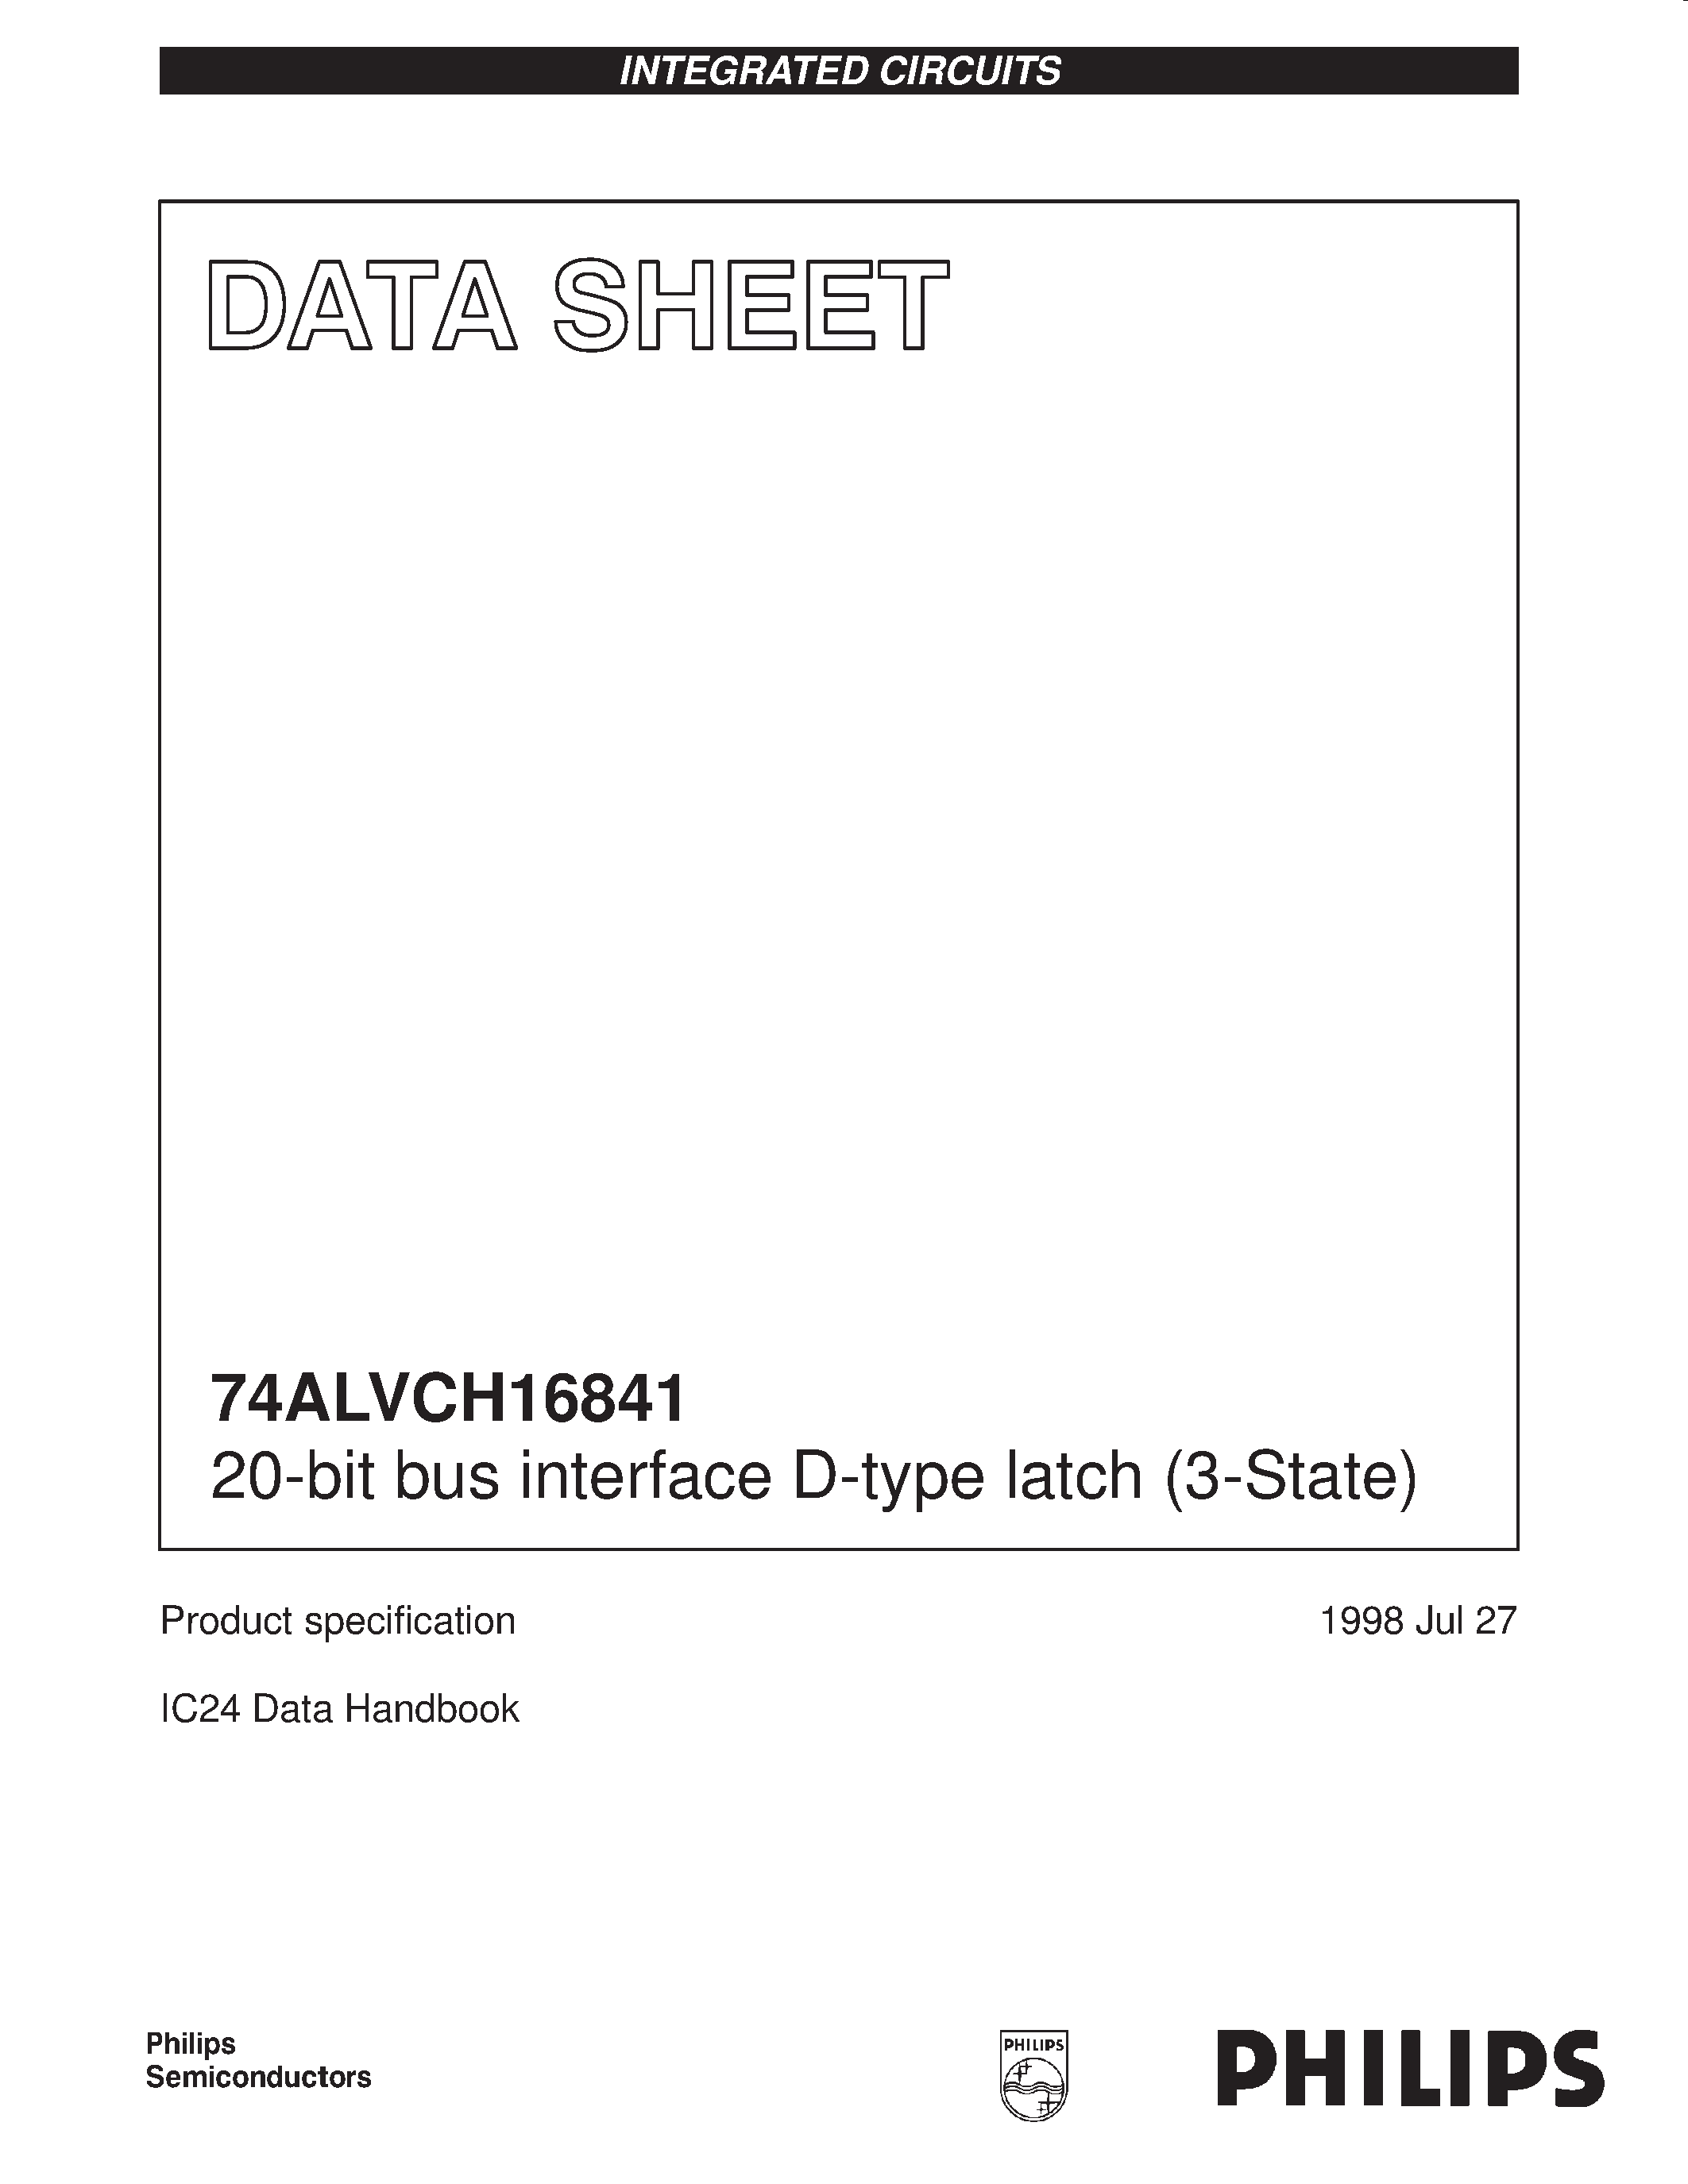 Даташит 74ALVCH16841 - 20-bit bus interface D-type latch 3-State страница 1